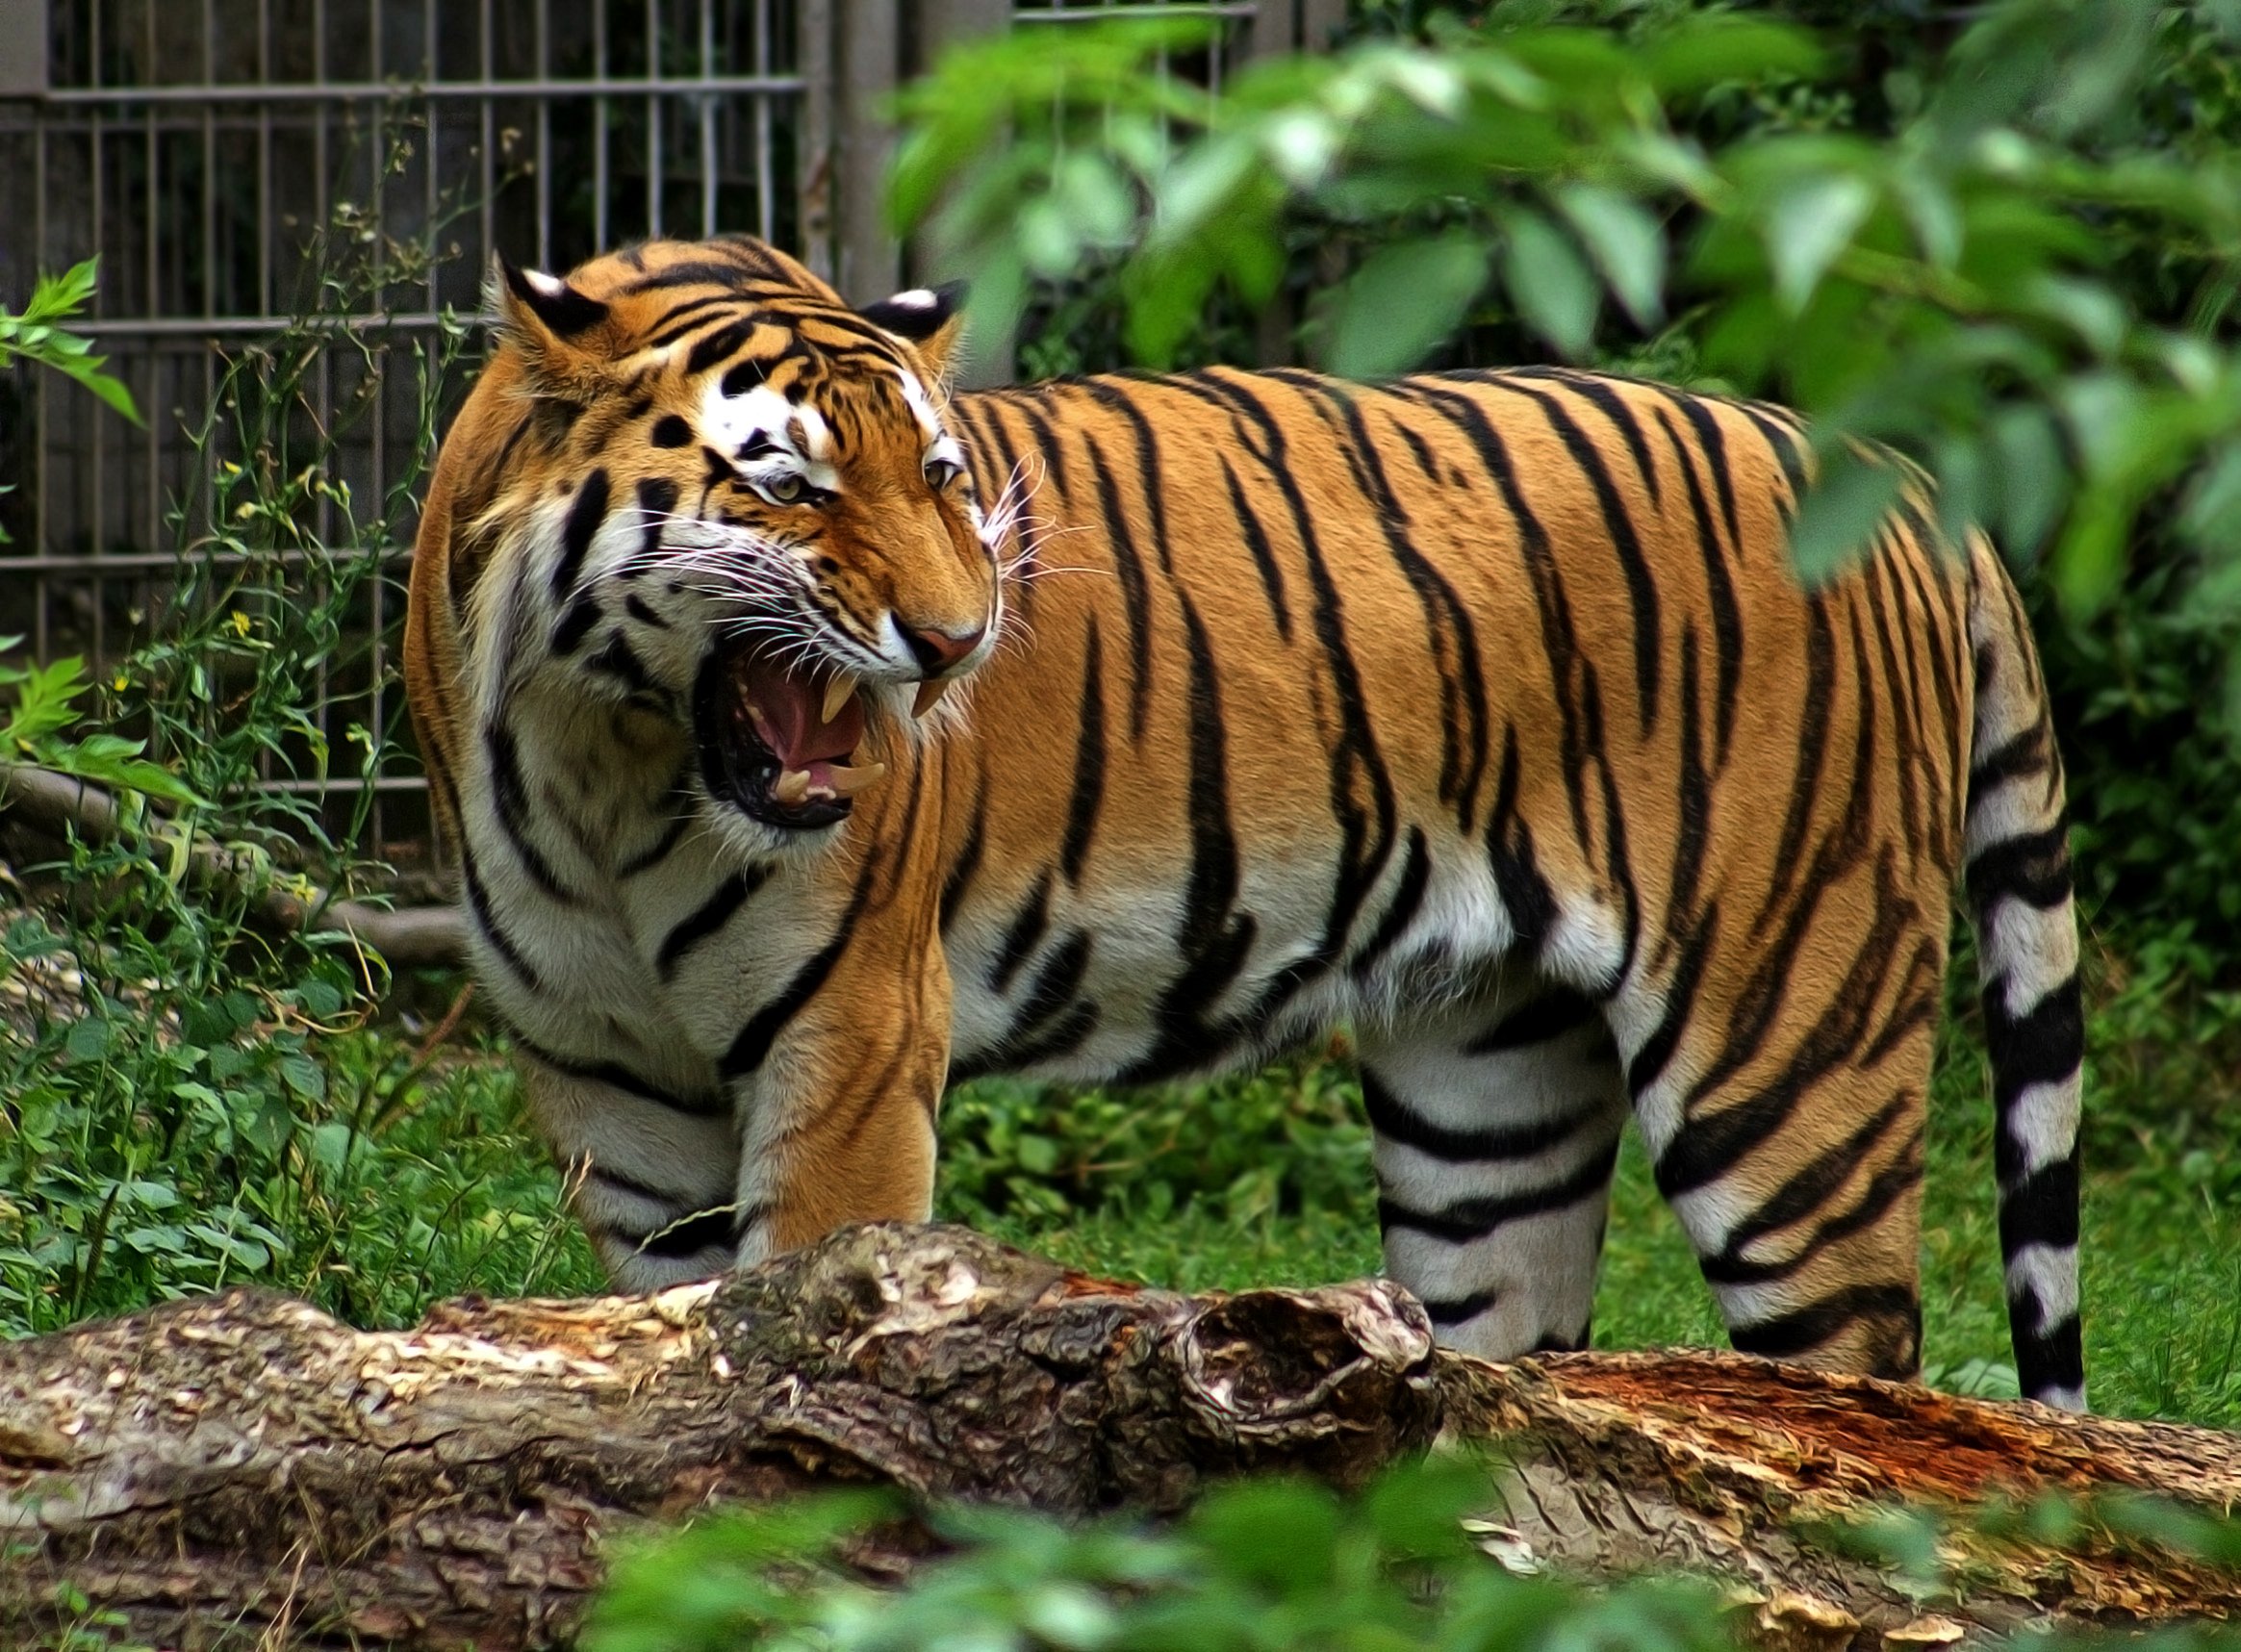 Тигр живут в зоопарке. Зоопарк Мюнхен тигры. Амурский тигр в зоопарке. Московский зоопарк тигр. Дети в зоопарке с тиграми.